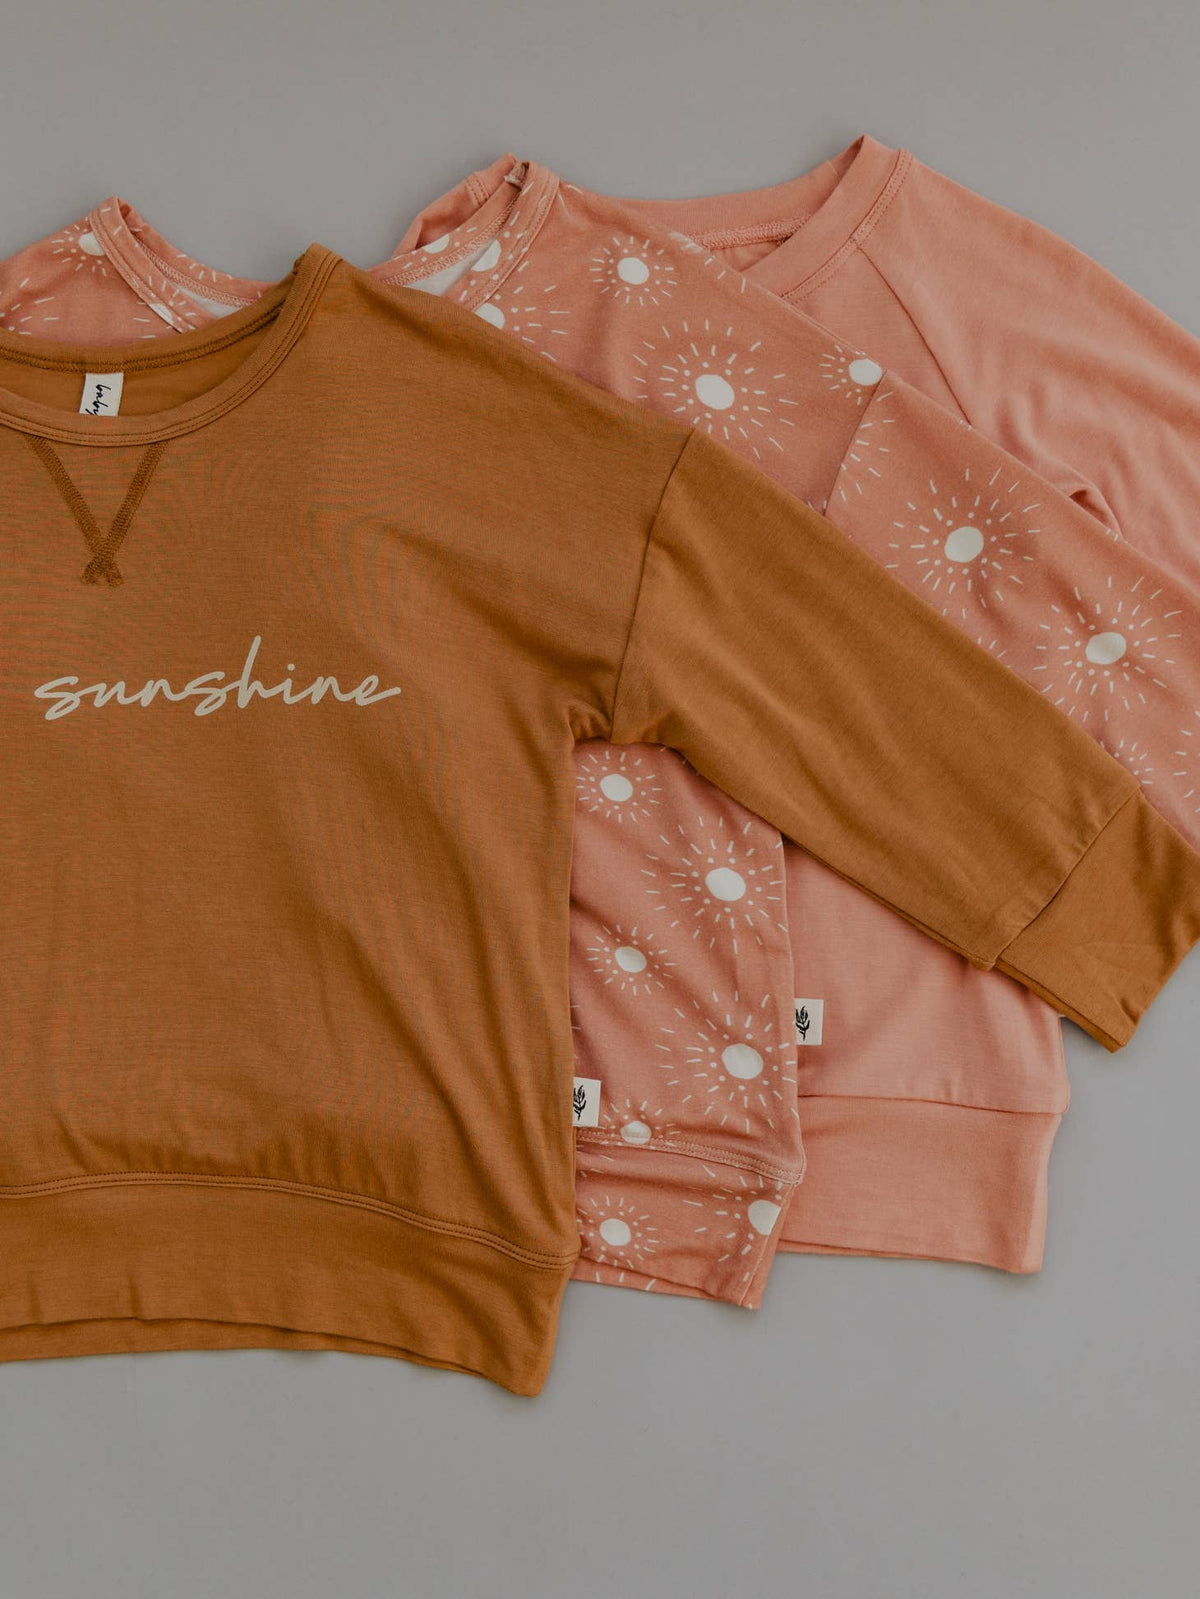 Drop-Shoulder Sweatshirt - Rose Sunburst